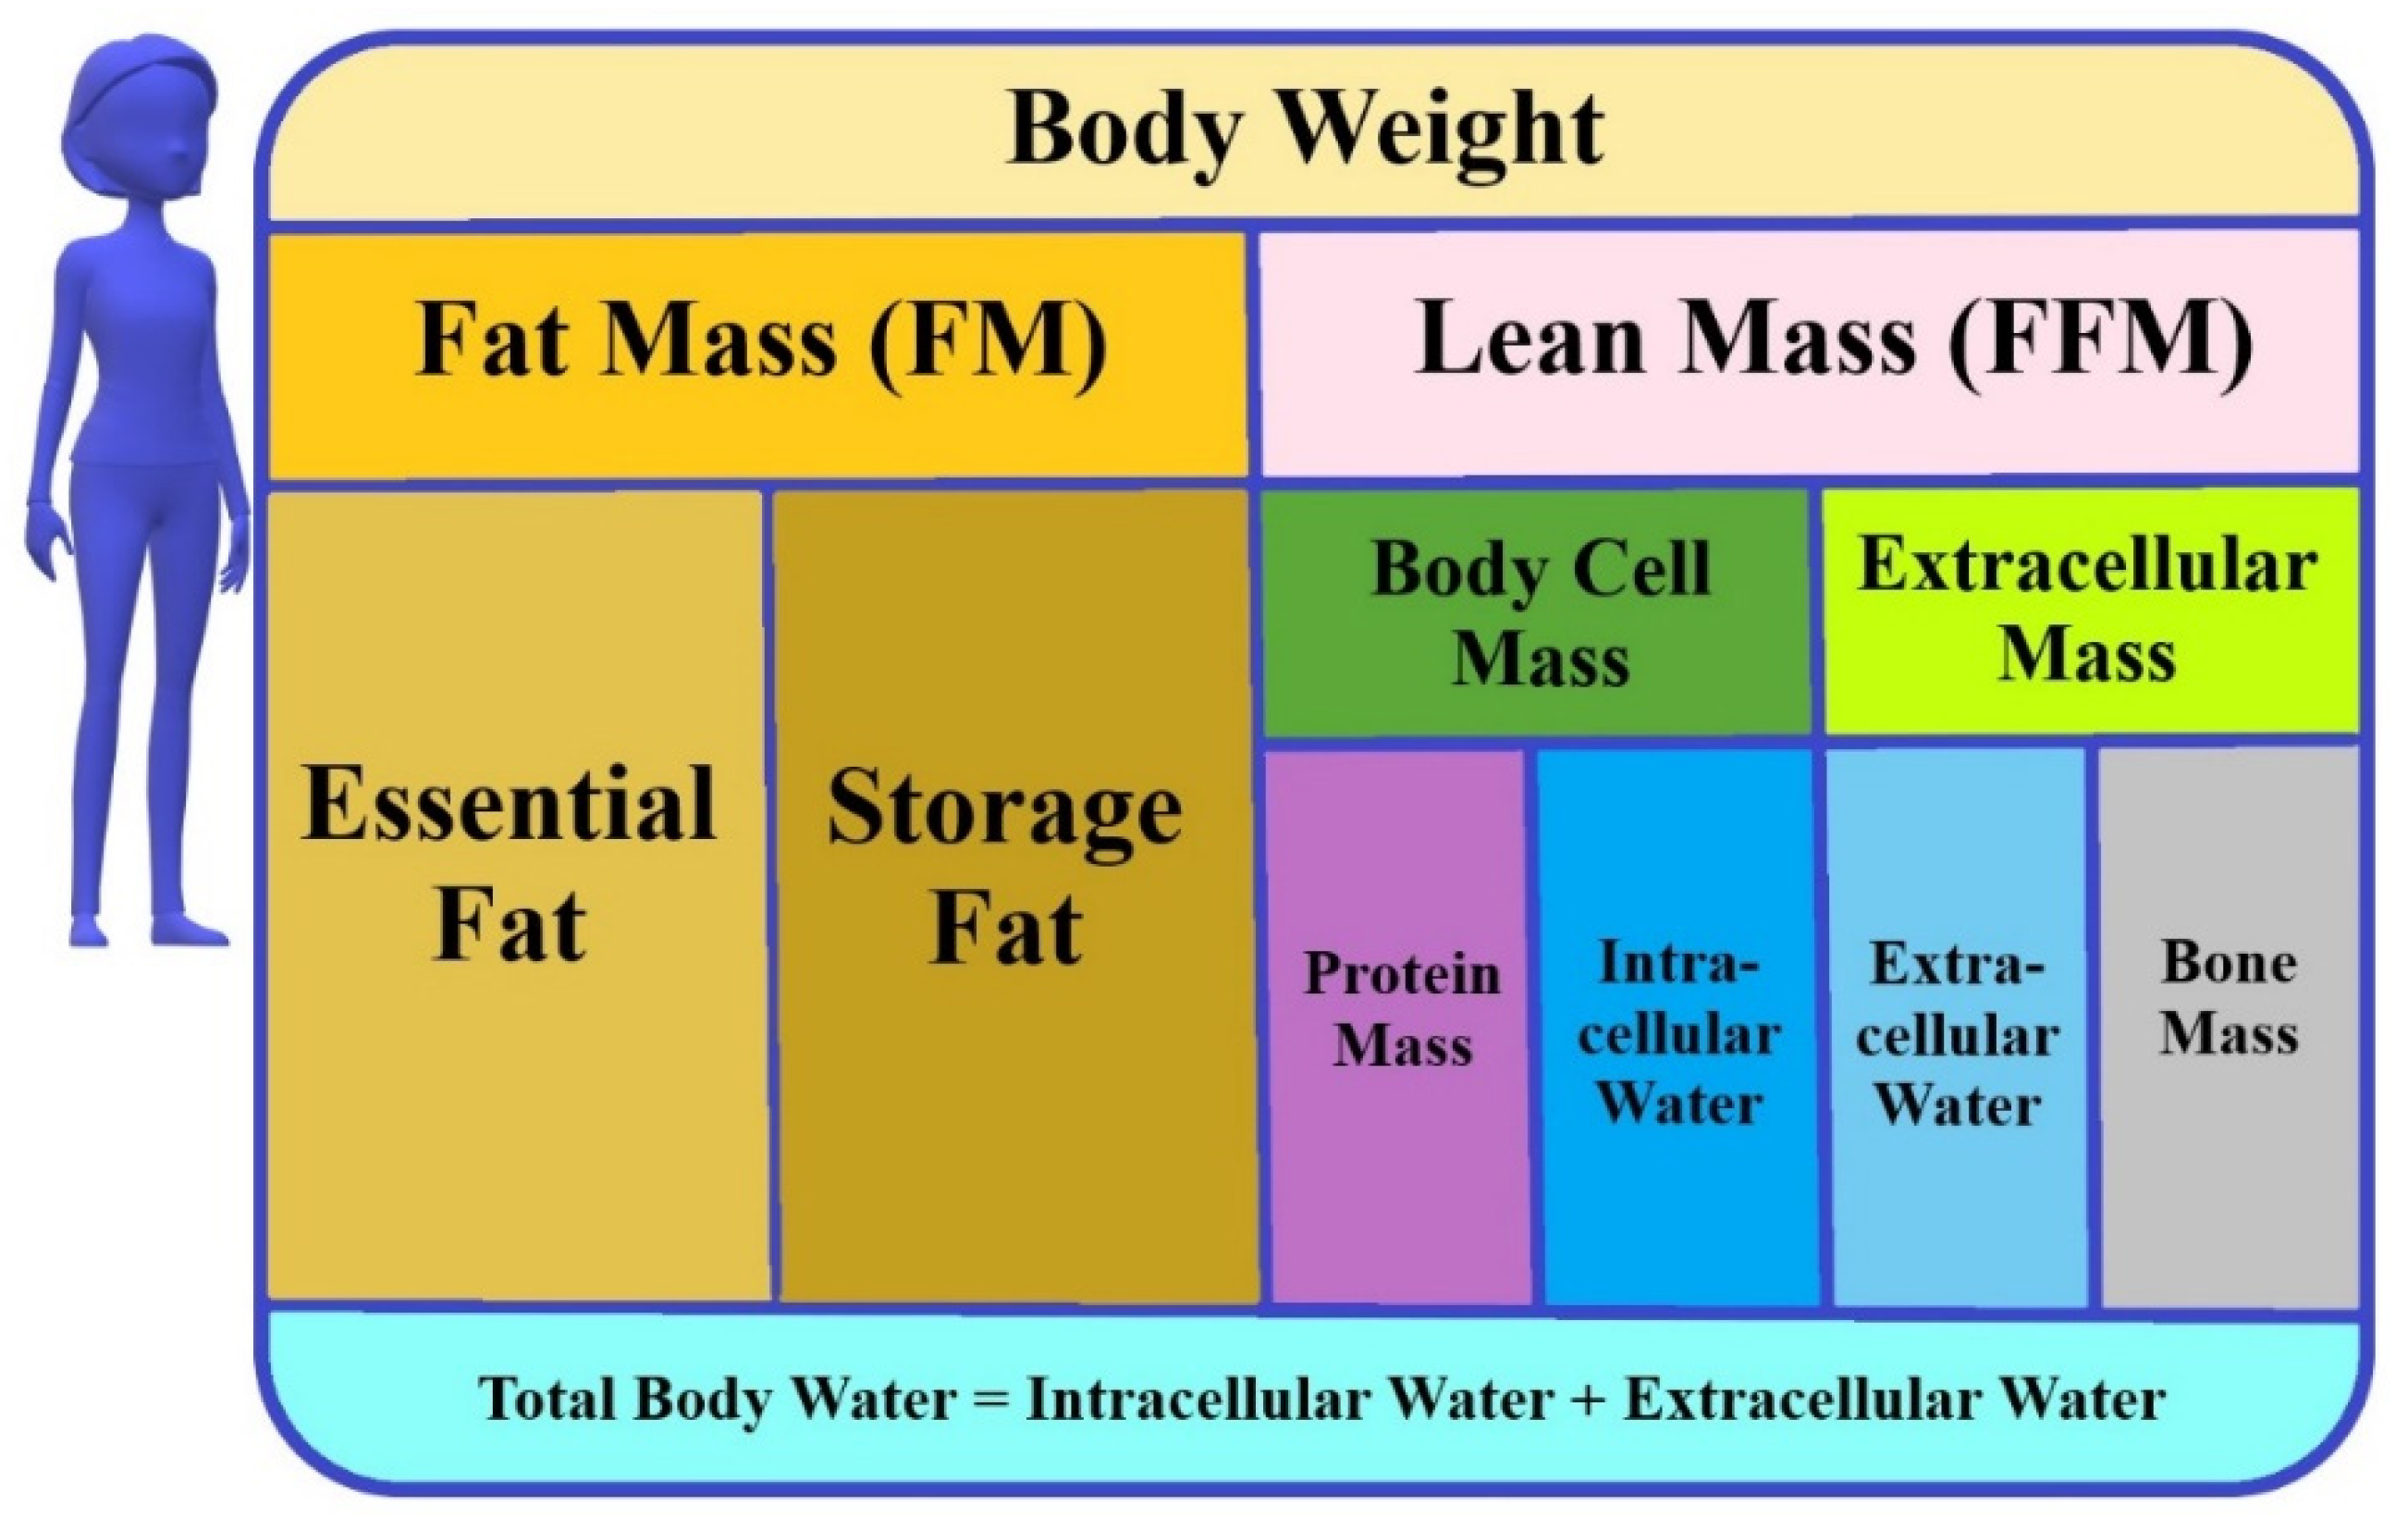 BIA body fat distribution analysis